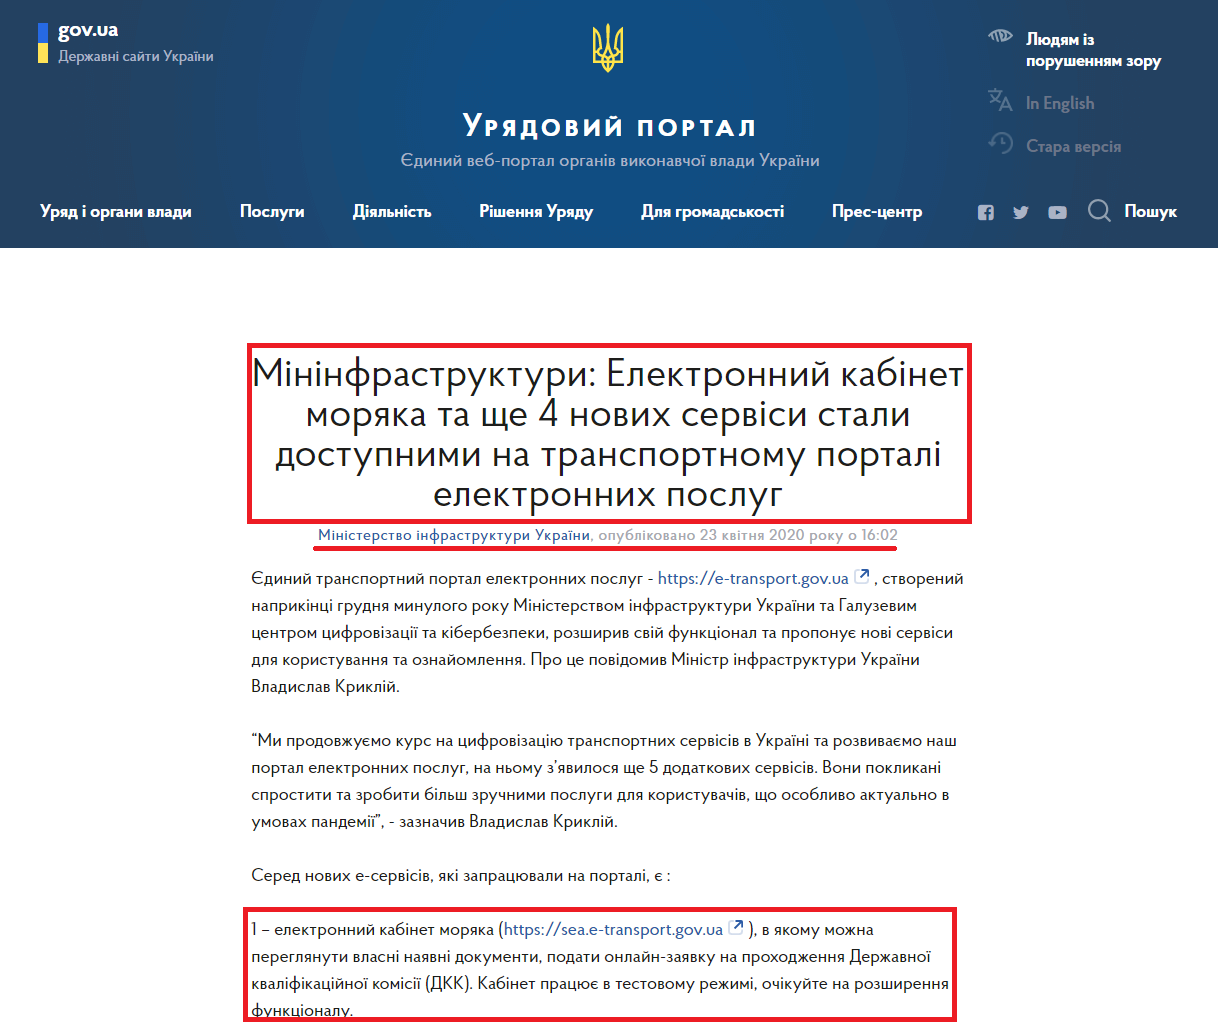 https://www.kmu.gov.ua/news/mininfrastrukturi-elektronnij-kabinet-moryaka-ta-shche-4-novih-servisi-stali-dostupnimi-na-transportnomu-portali-elektronnih-poslug